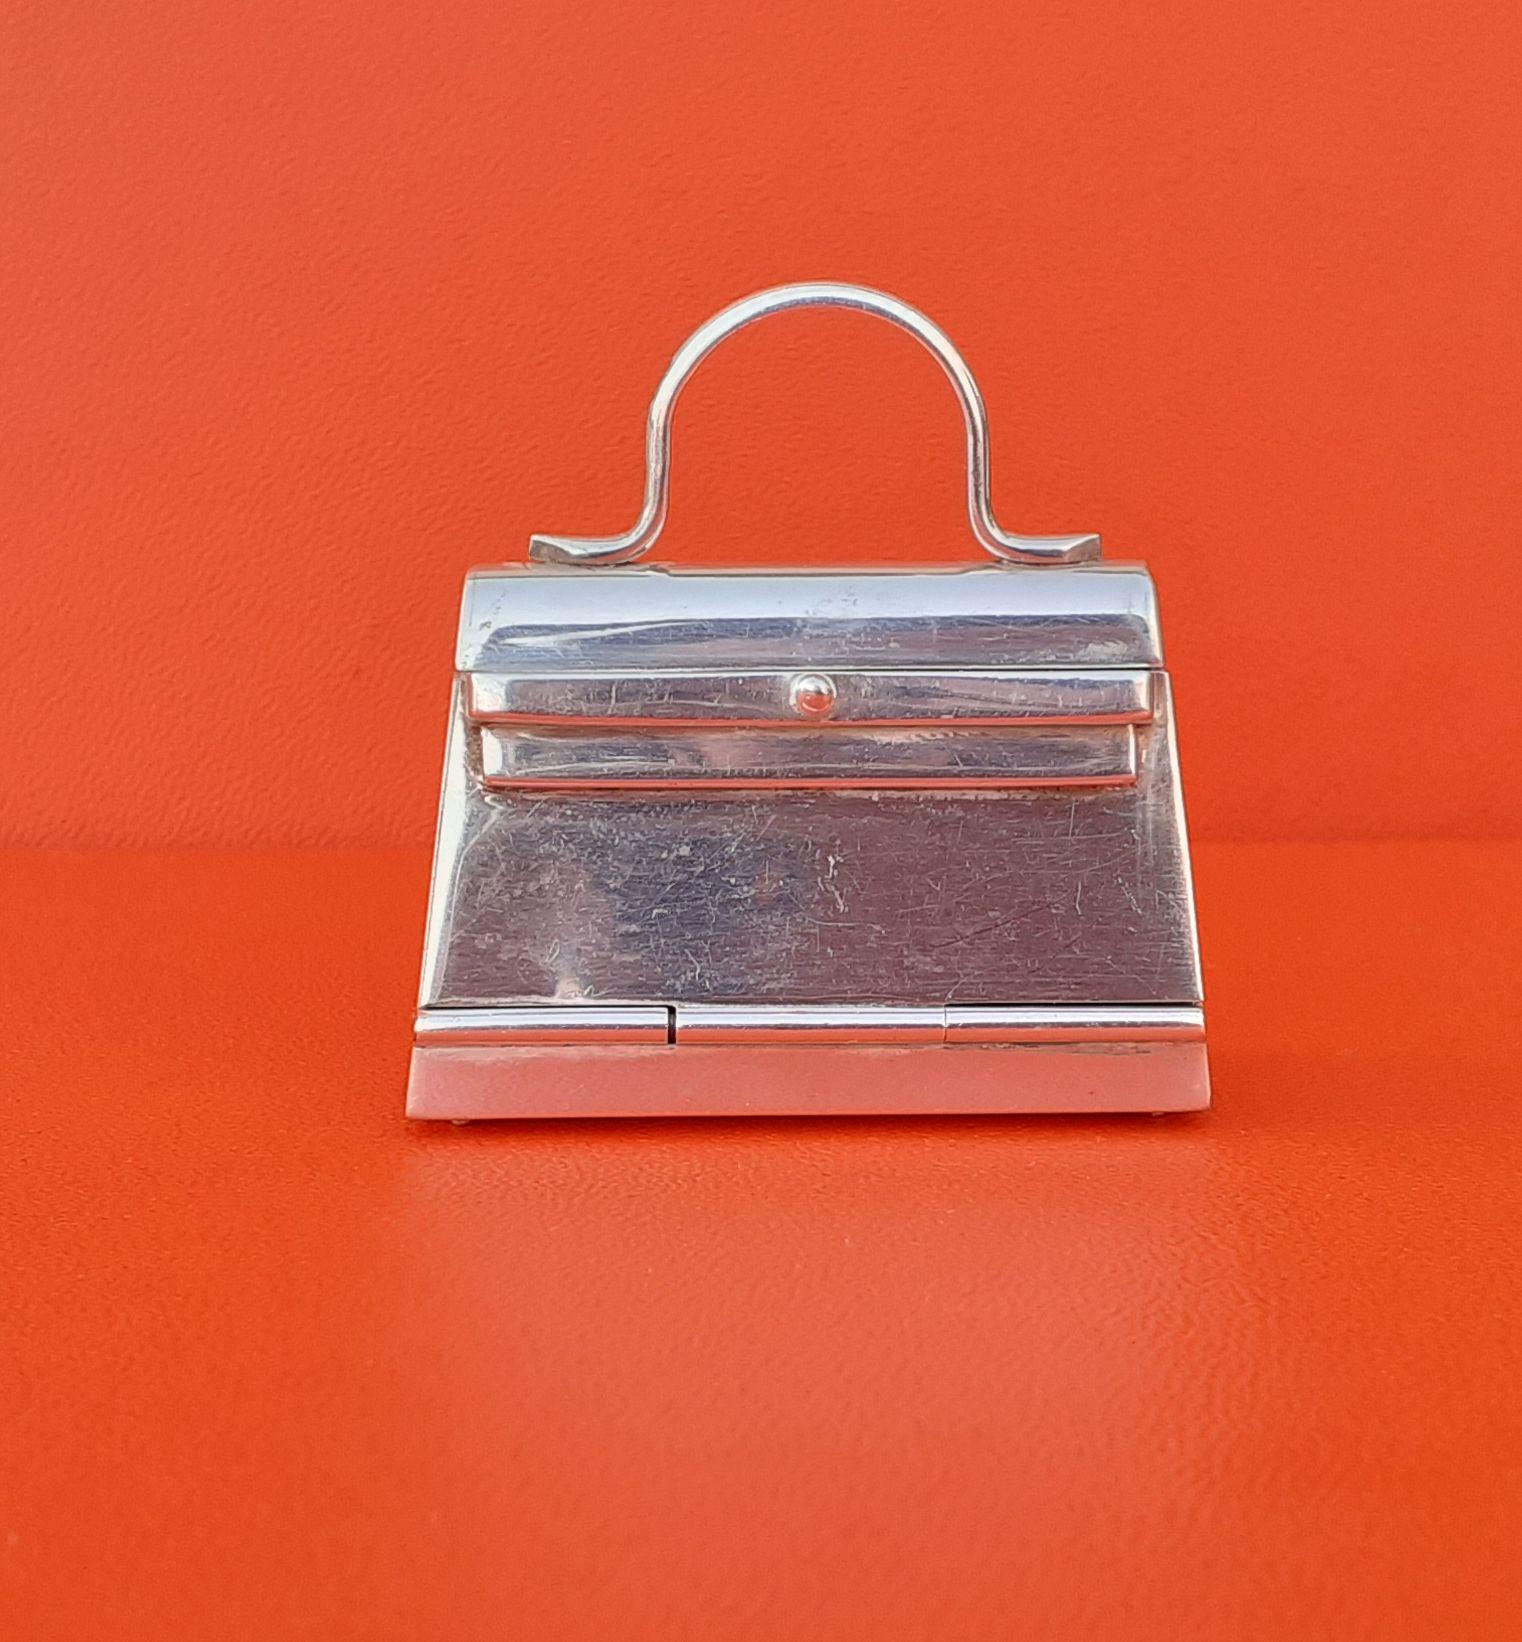 Rare Authentic Hermès Pill Box

Mini 